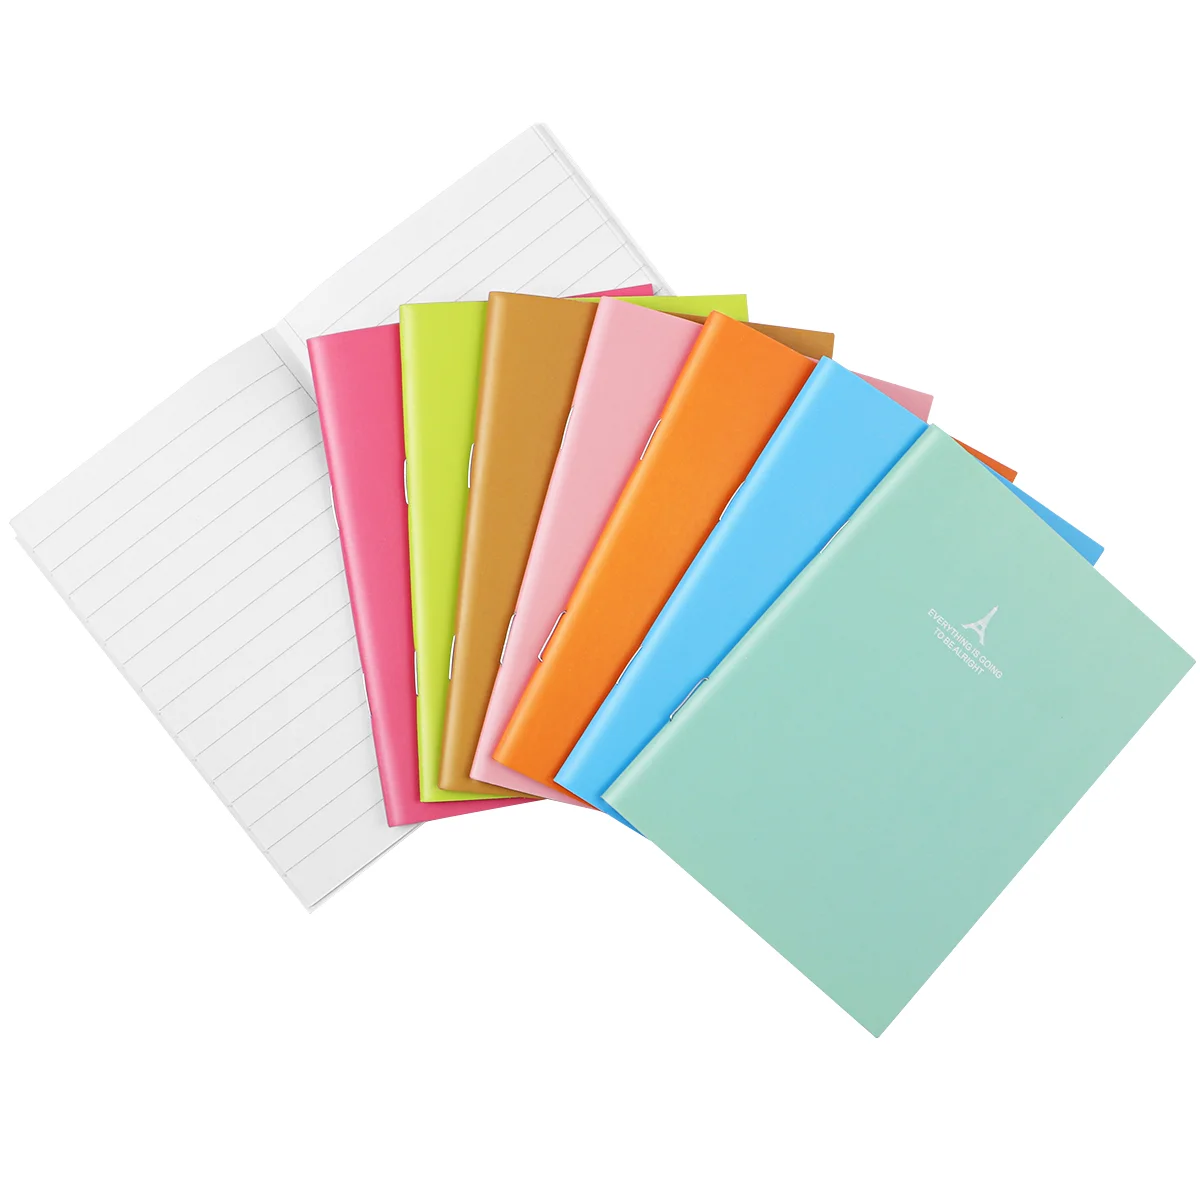 

24PCS Notebook, Candy Colors Portable Pocket Notebook Steno Memo Pad Journals ( 8 Colros, 3pcs/ Color )